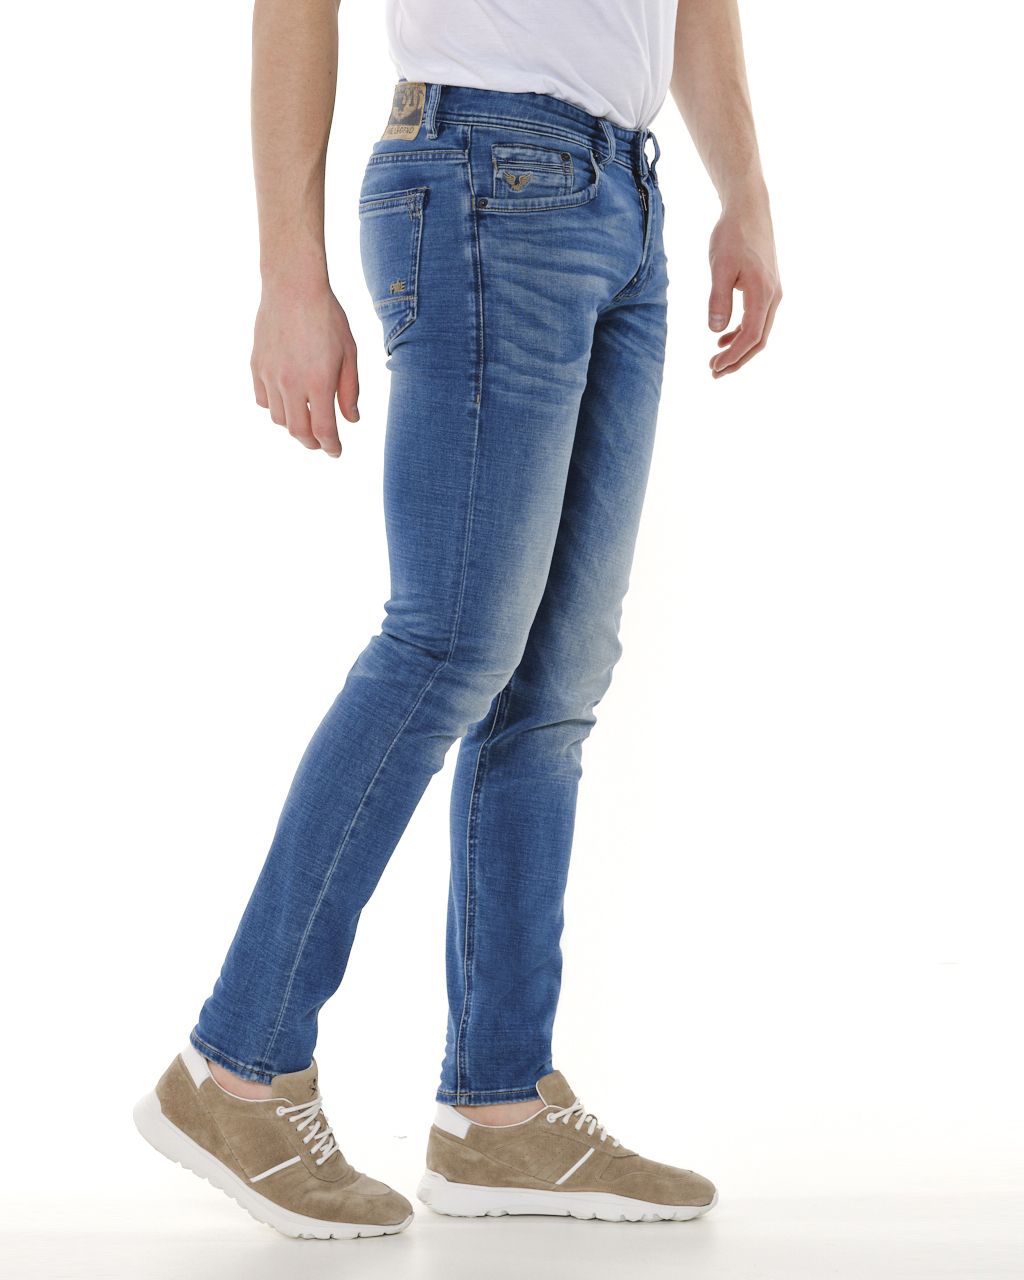 PME Legend Tailwheel Jeans | Shop nu - Only for Men